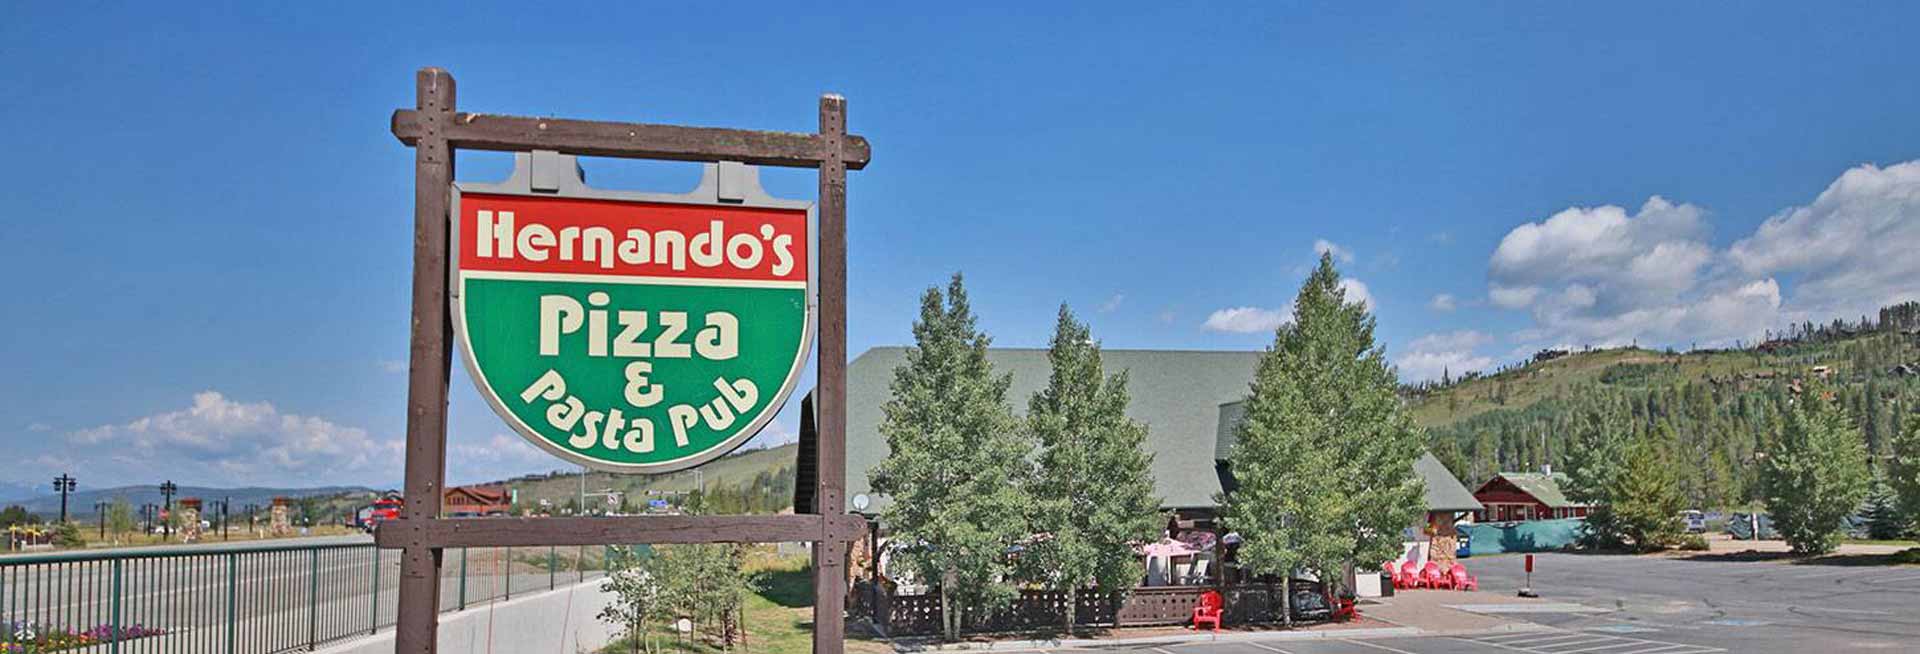 Hernando's Pizza & Pasta Pub sign and building exterior.